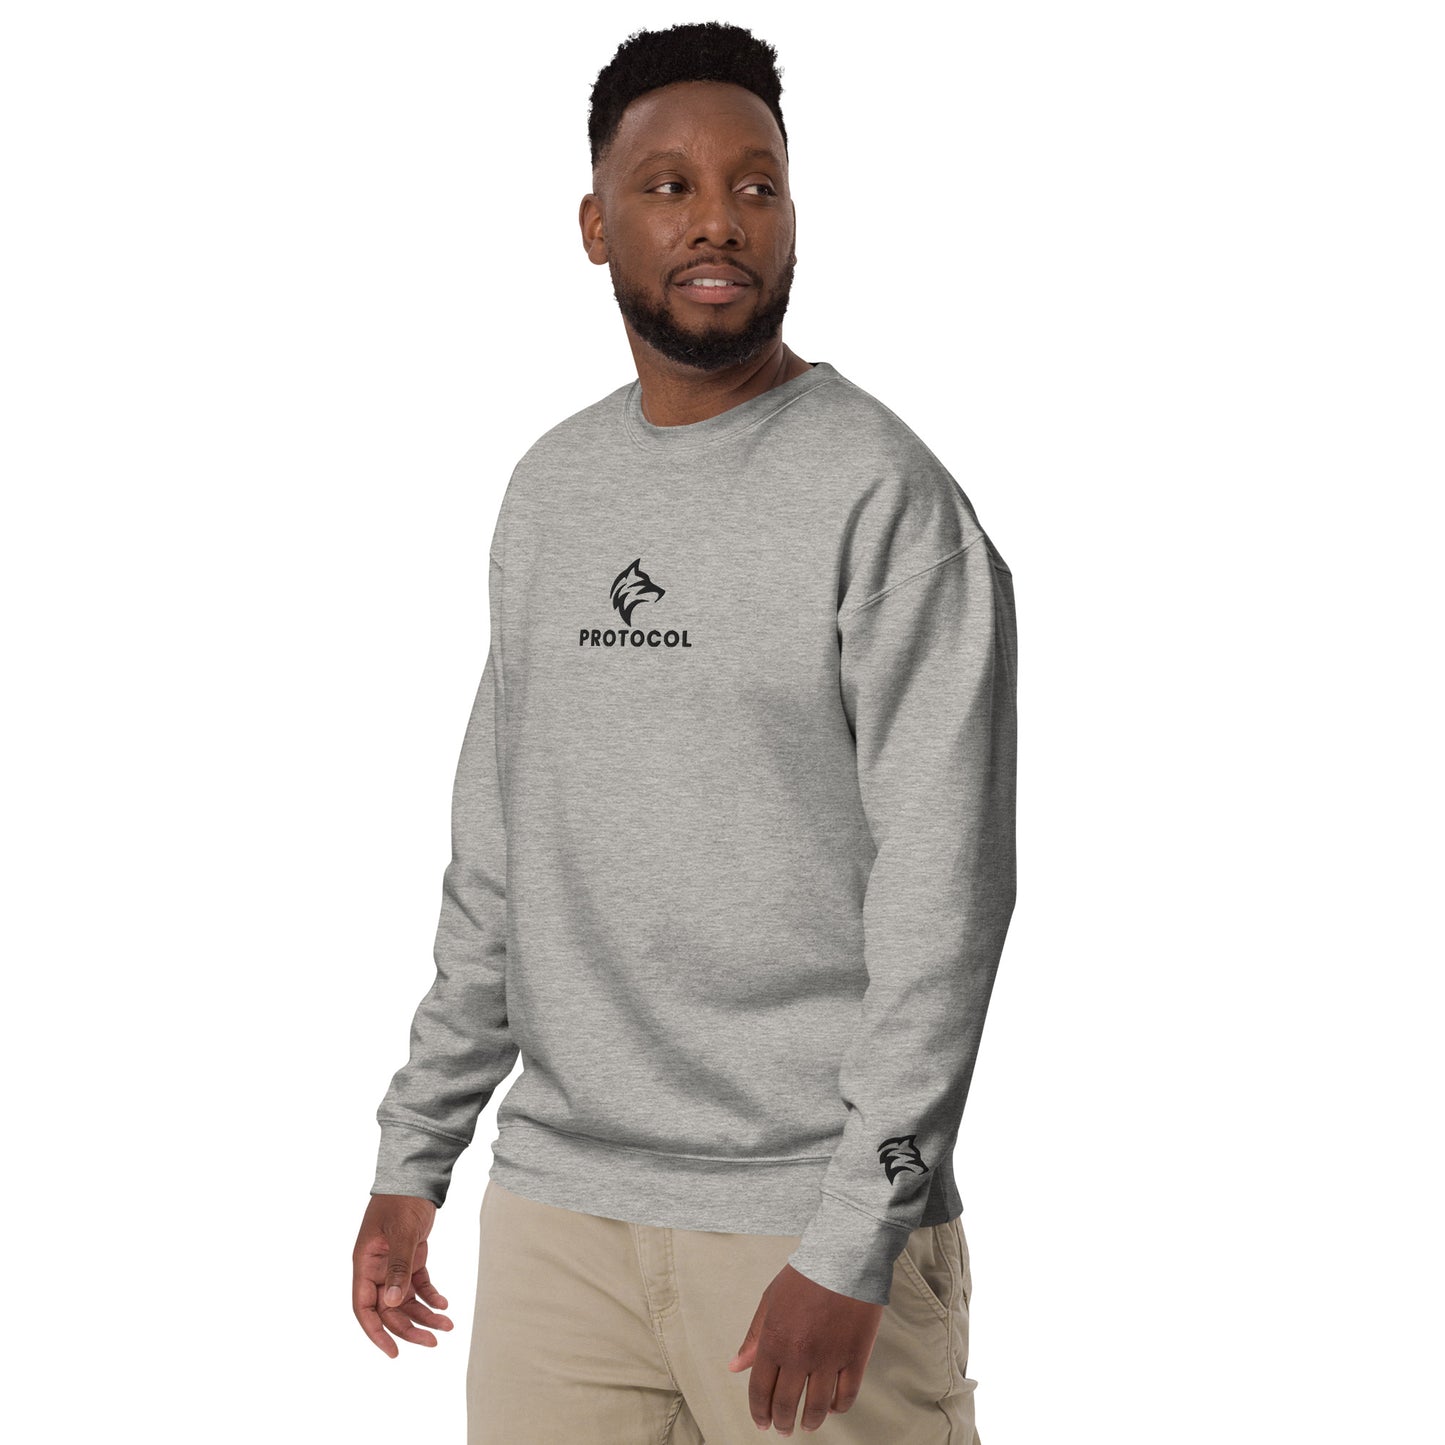 Calm Wolf Protocol - Embroidered Sweatshirt